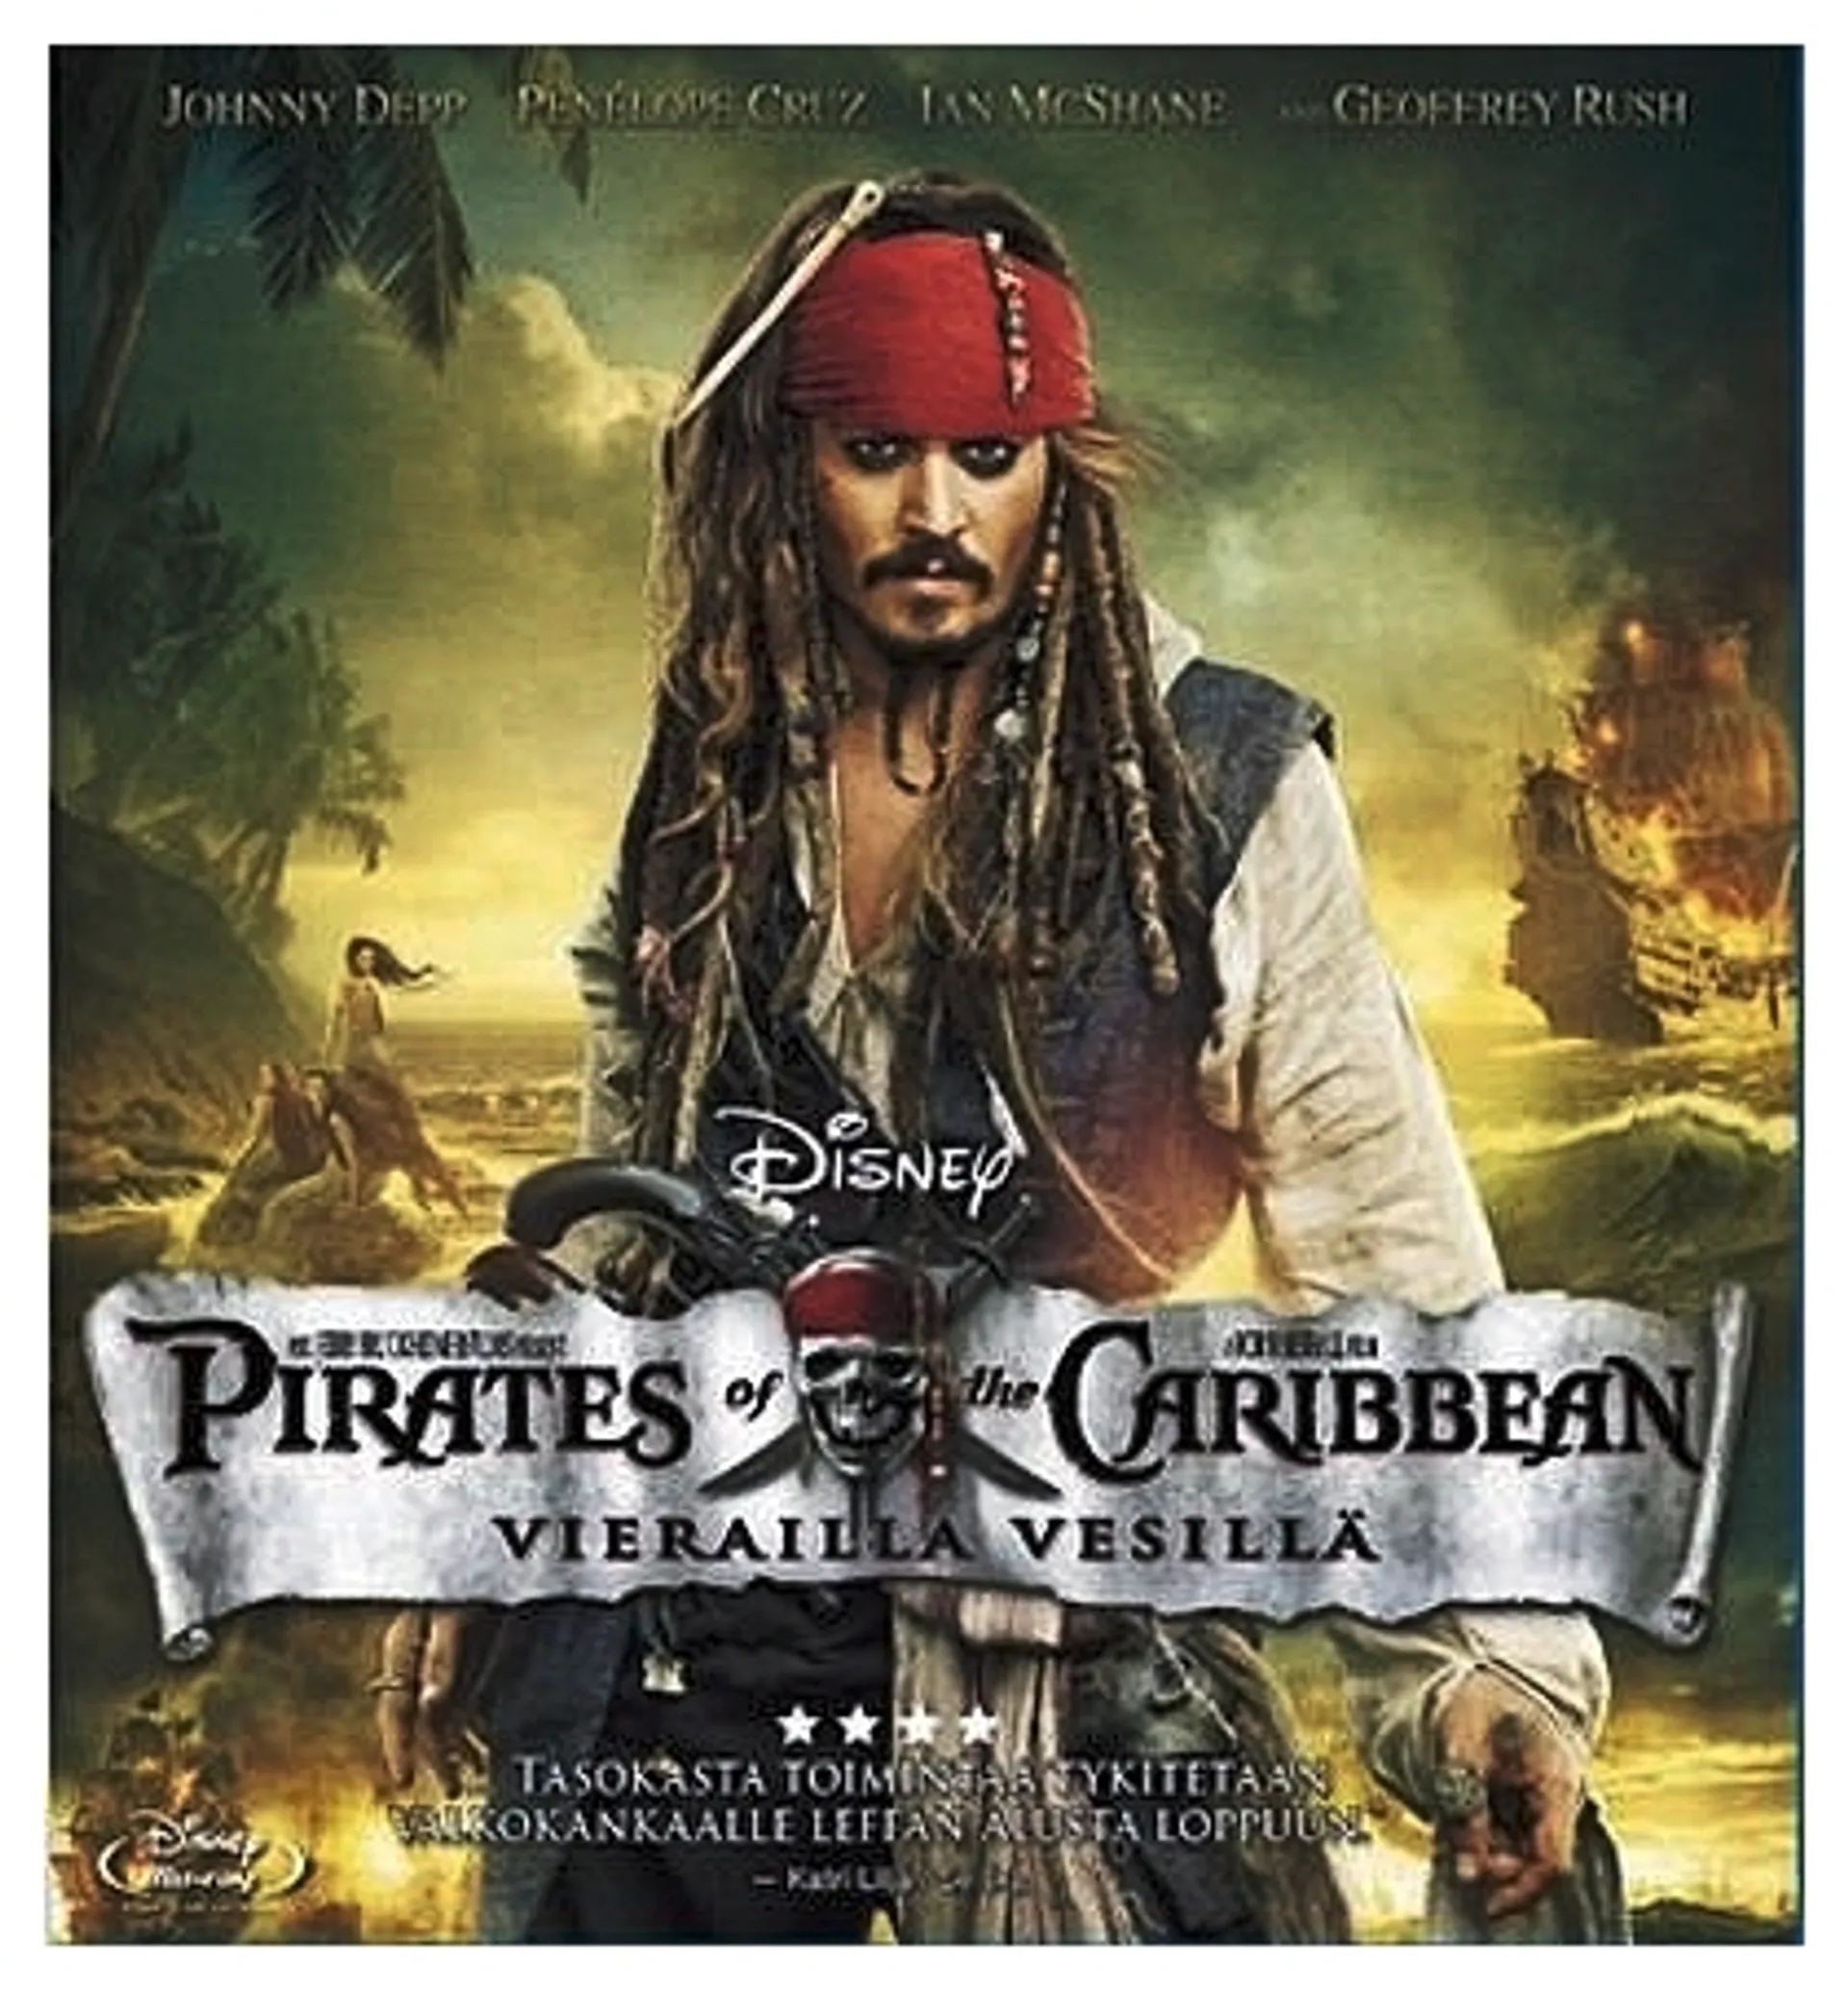 Pirates of the Caribbean 4 - Vierailla vesillä Blu-ray